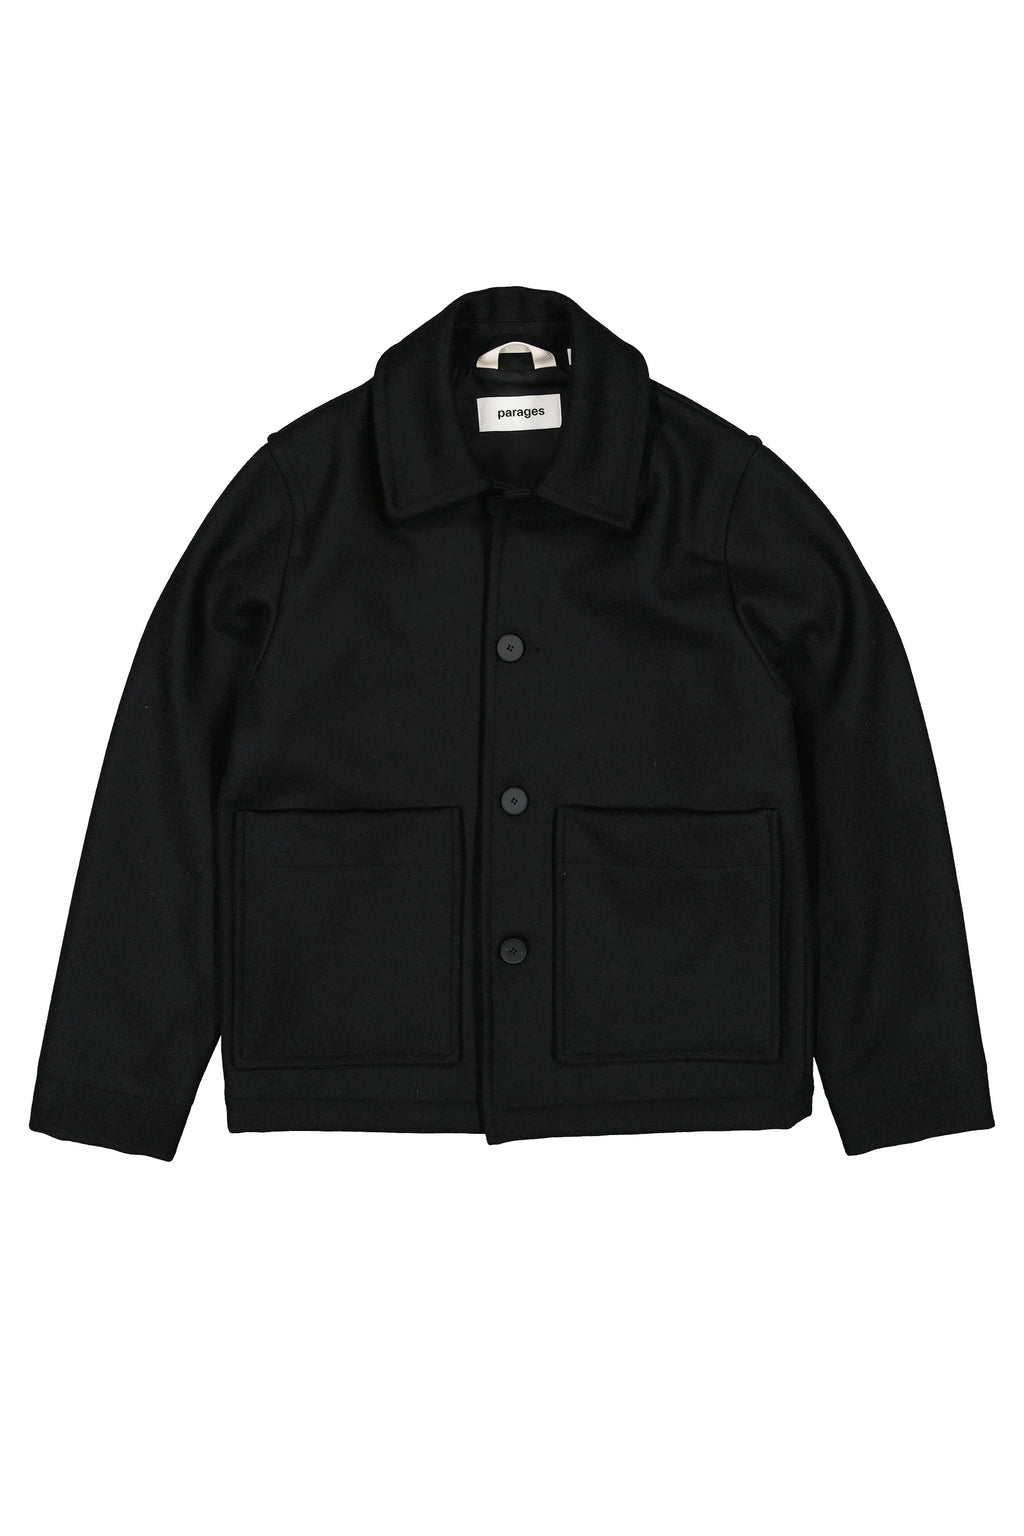 PARAGES Aubrac Wool Jacket — BLACK